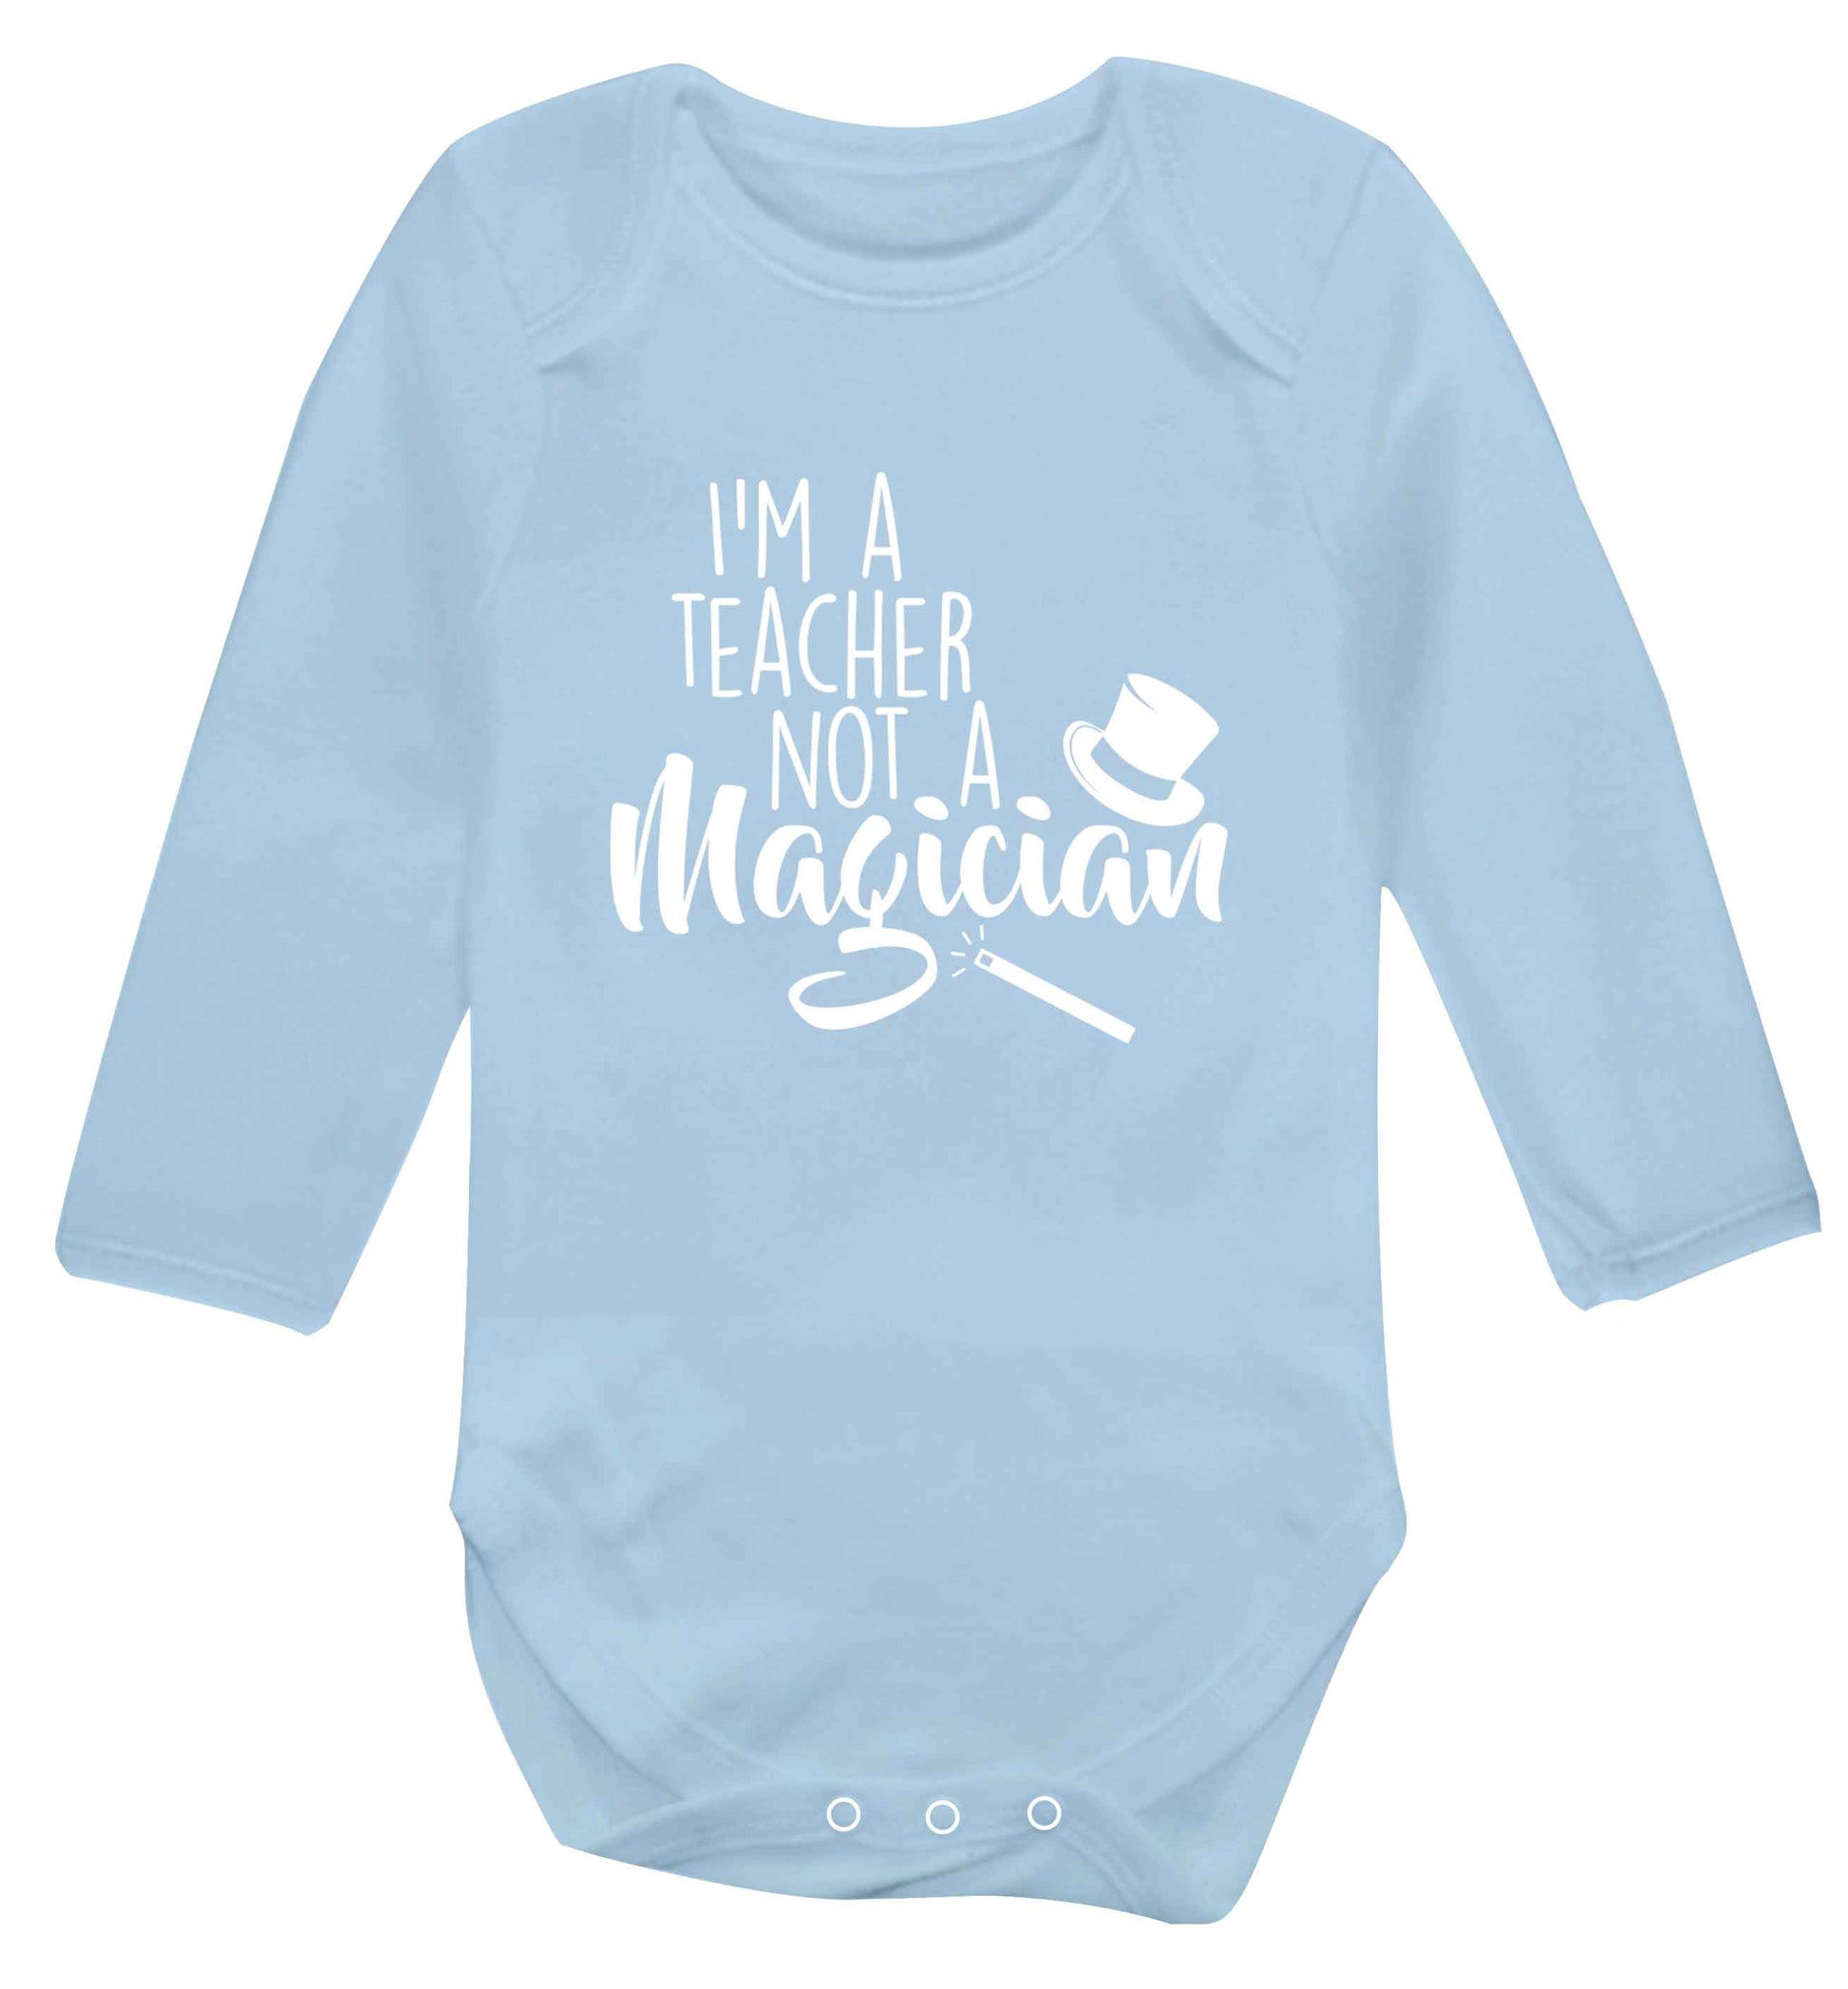 I'm a teacher not a magician baby vest long sleeved pale blue 6-12 months